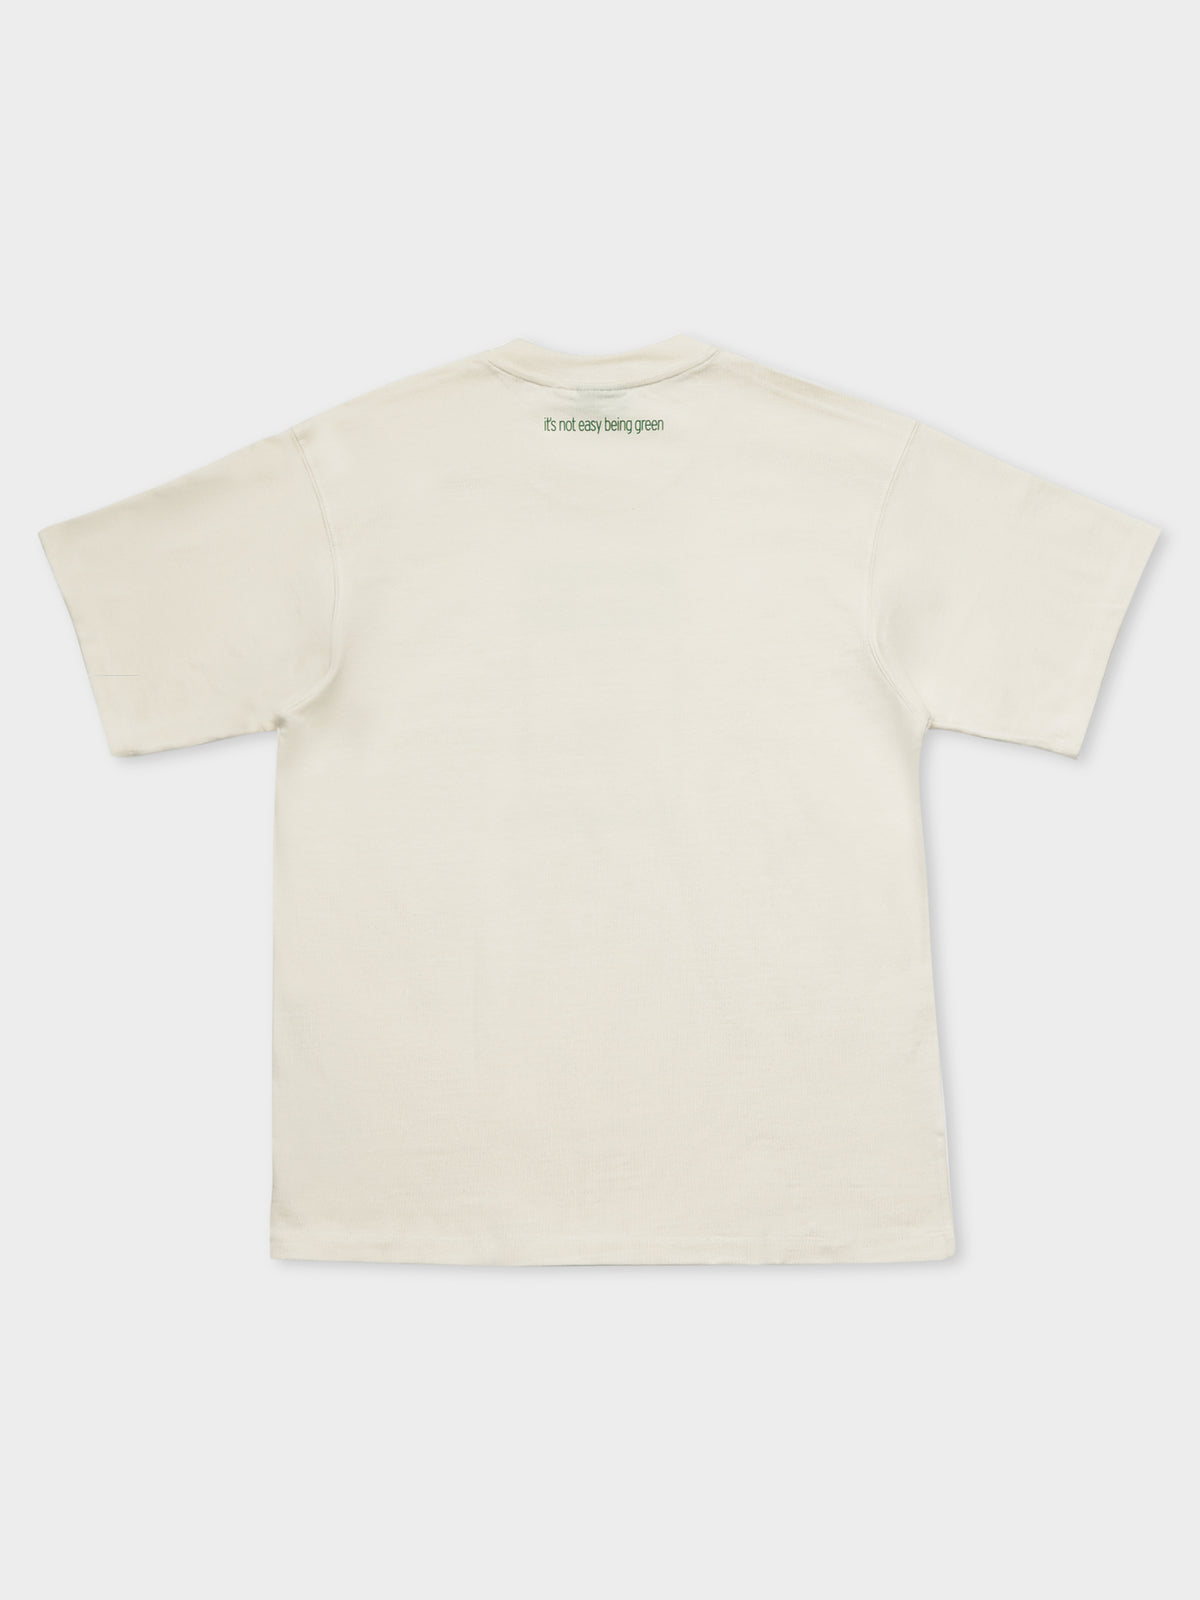 Tinkerbell T-Shirt in Cream